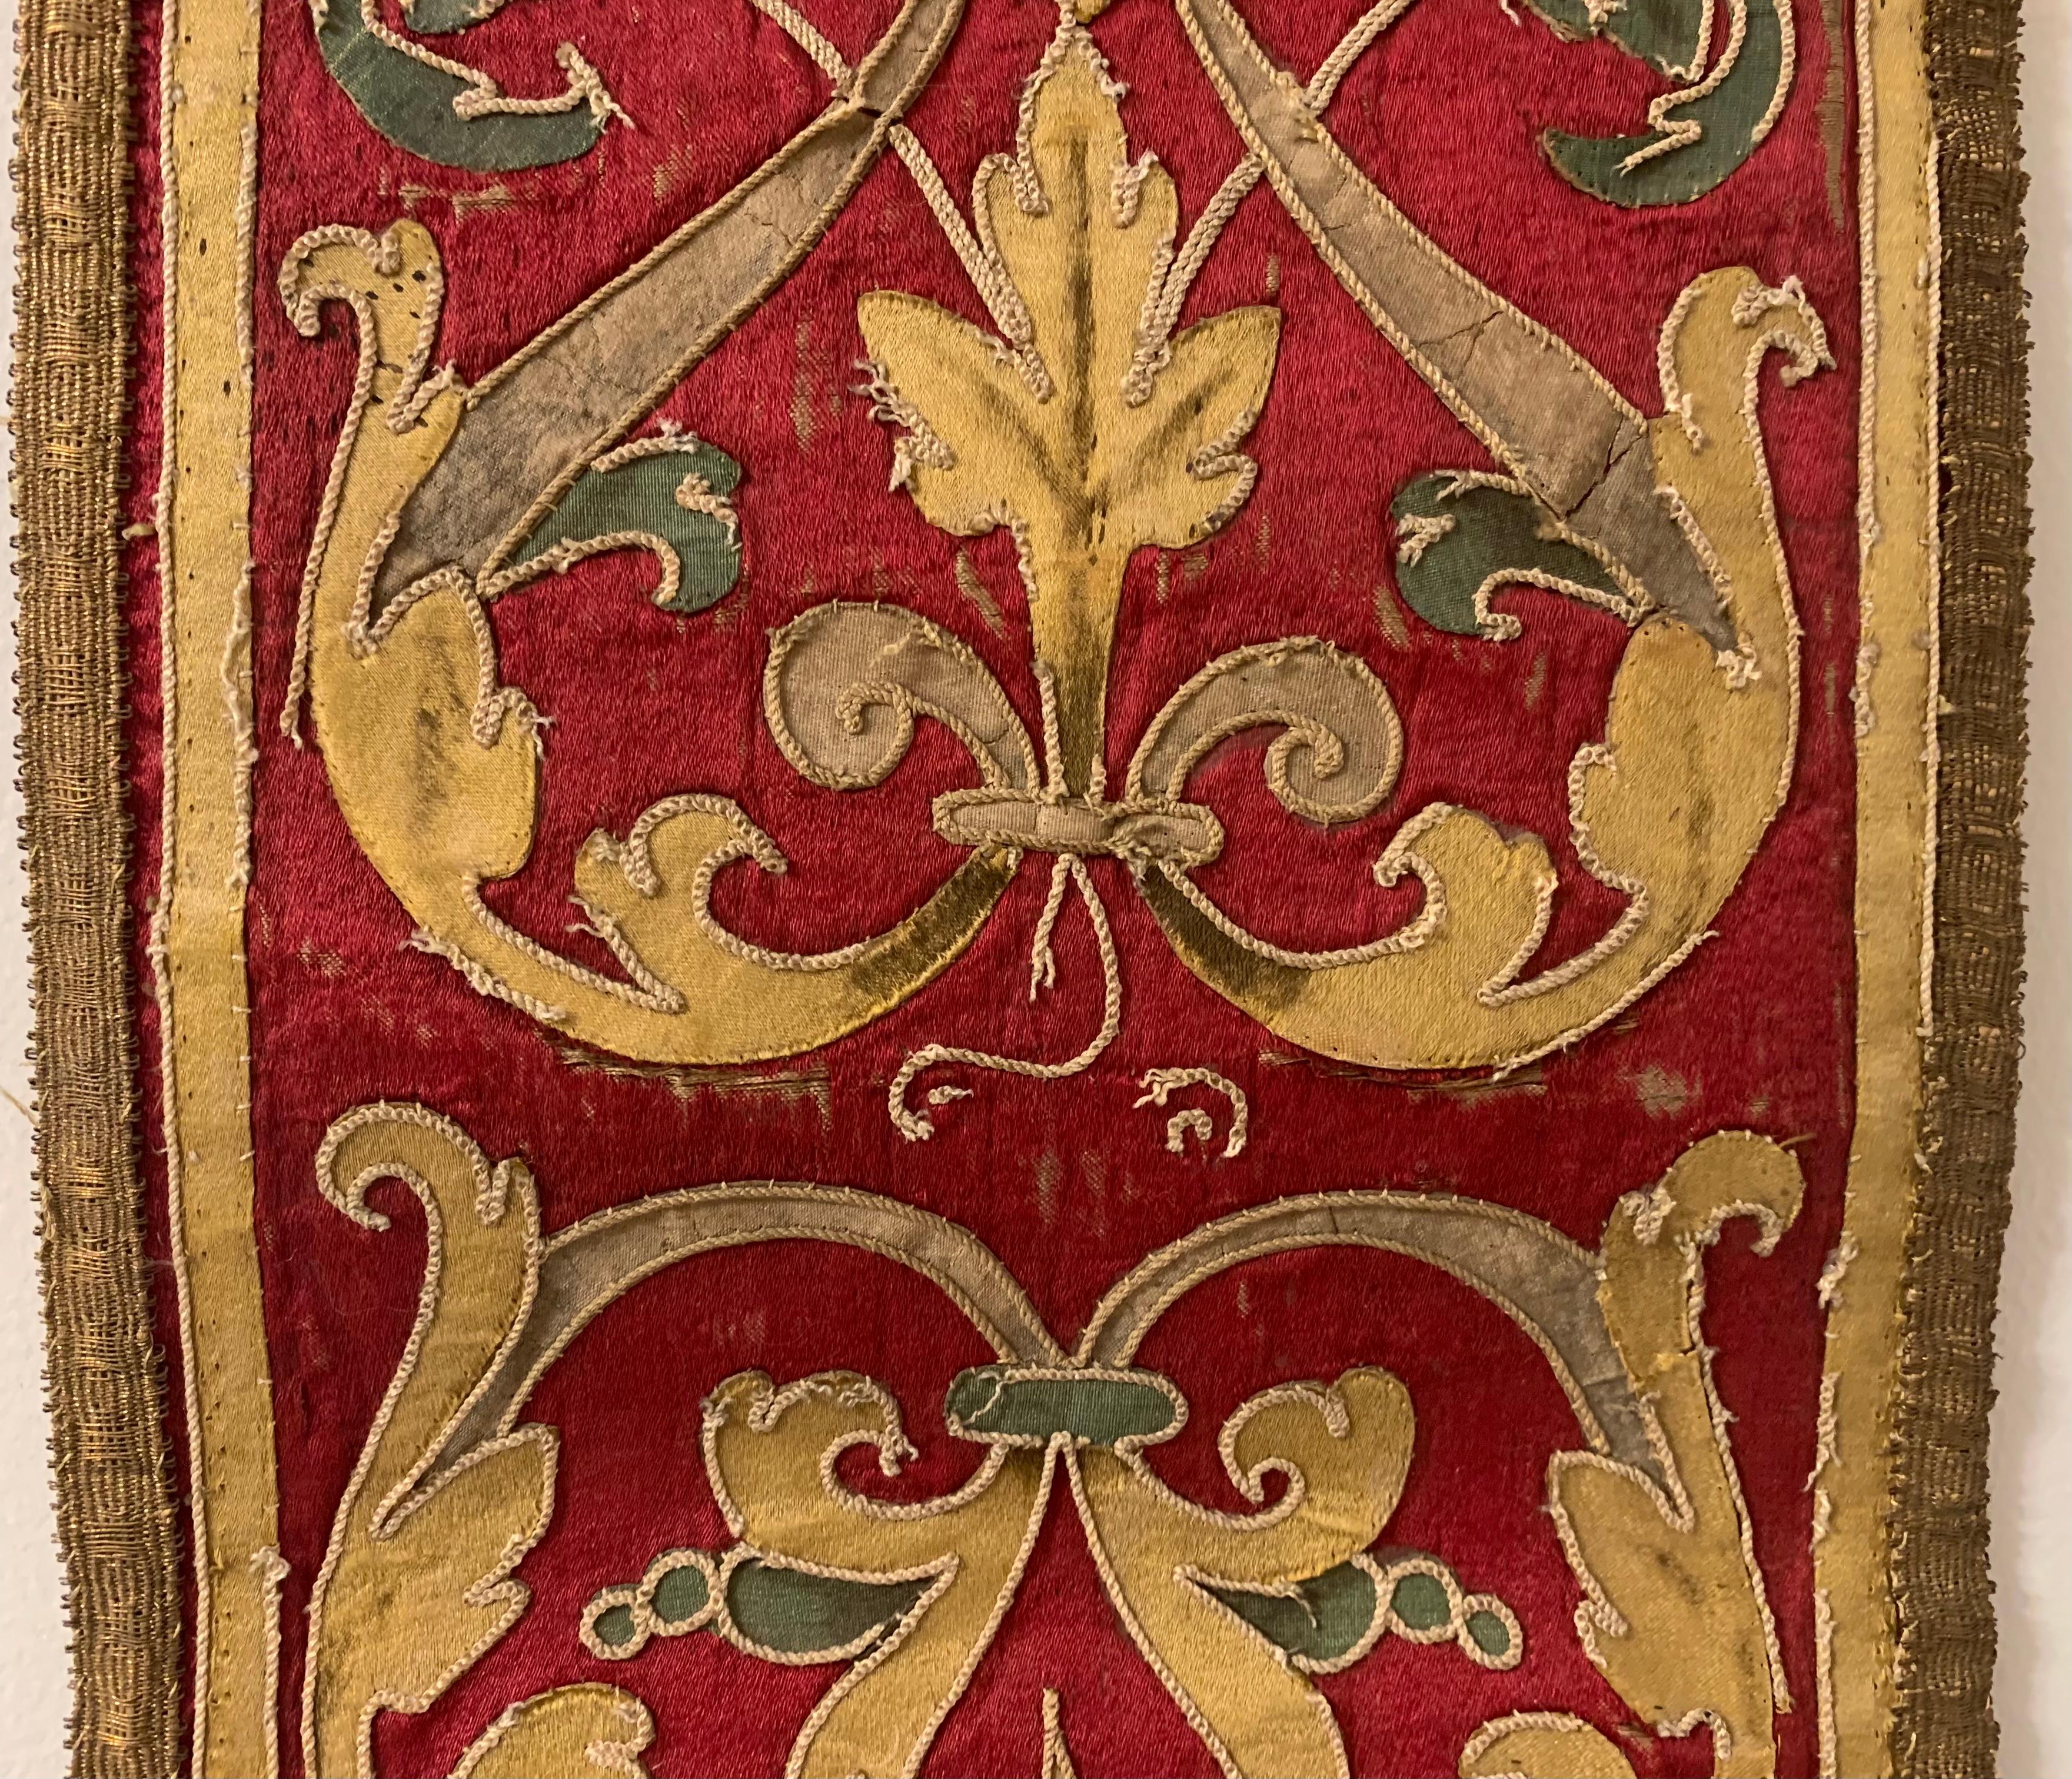 Antique 17th Century Baroque Italian Silk, Metallic Thread Embroidery Panel For Sale 2